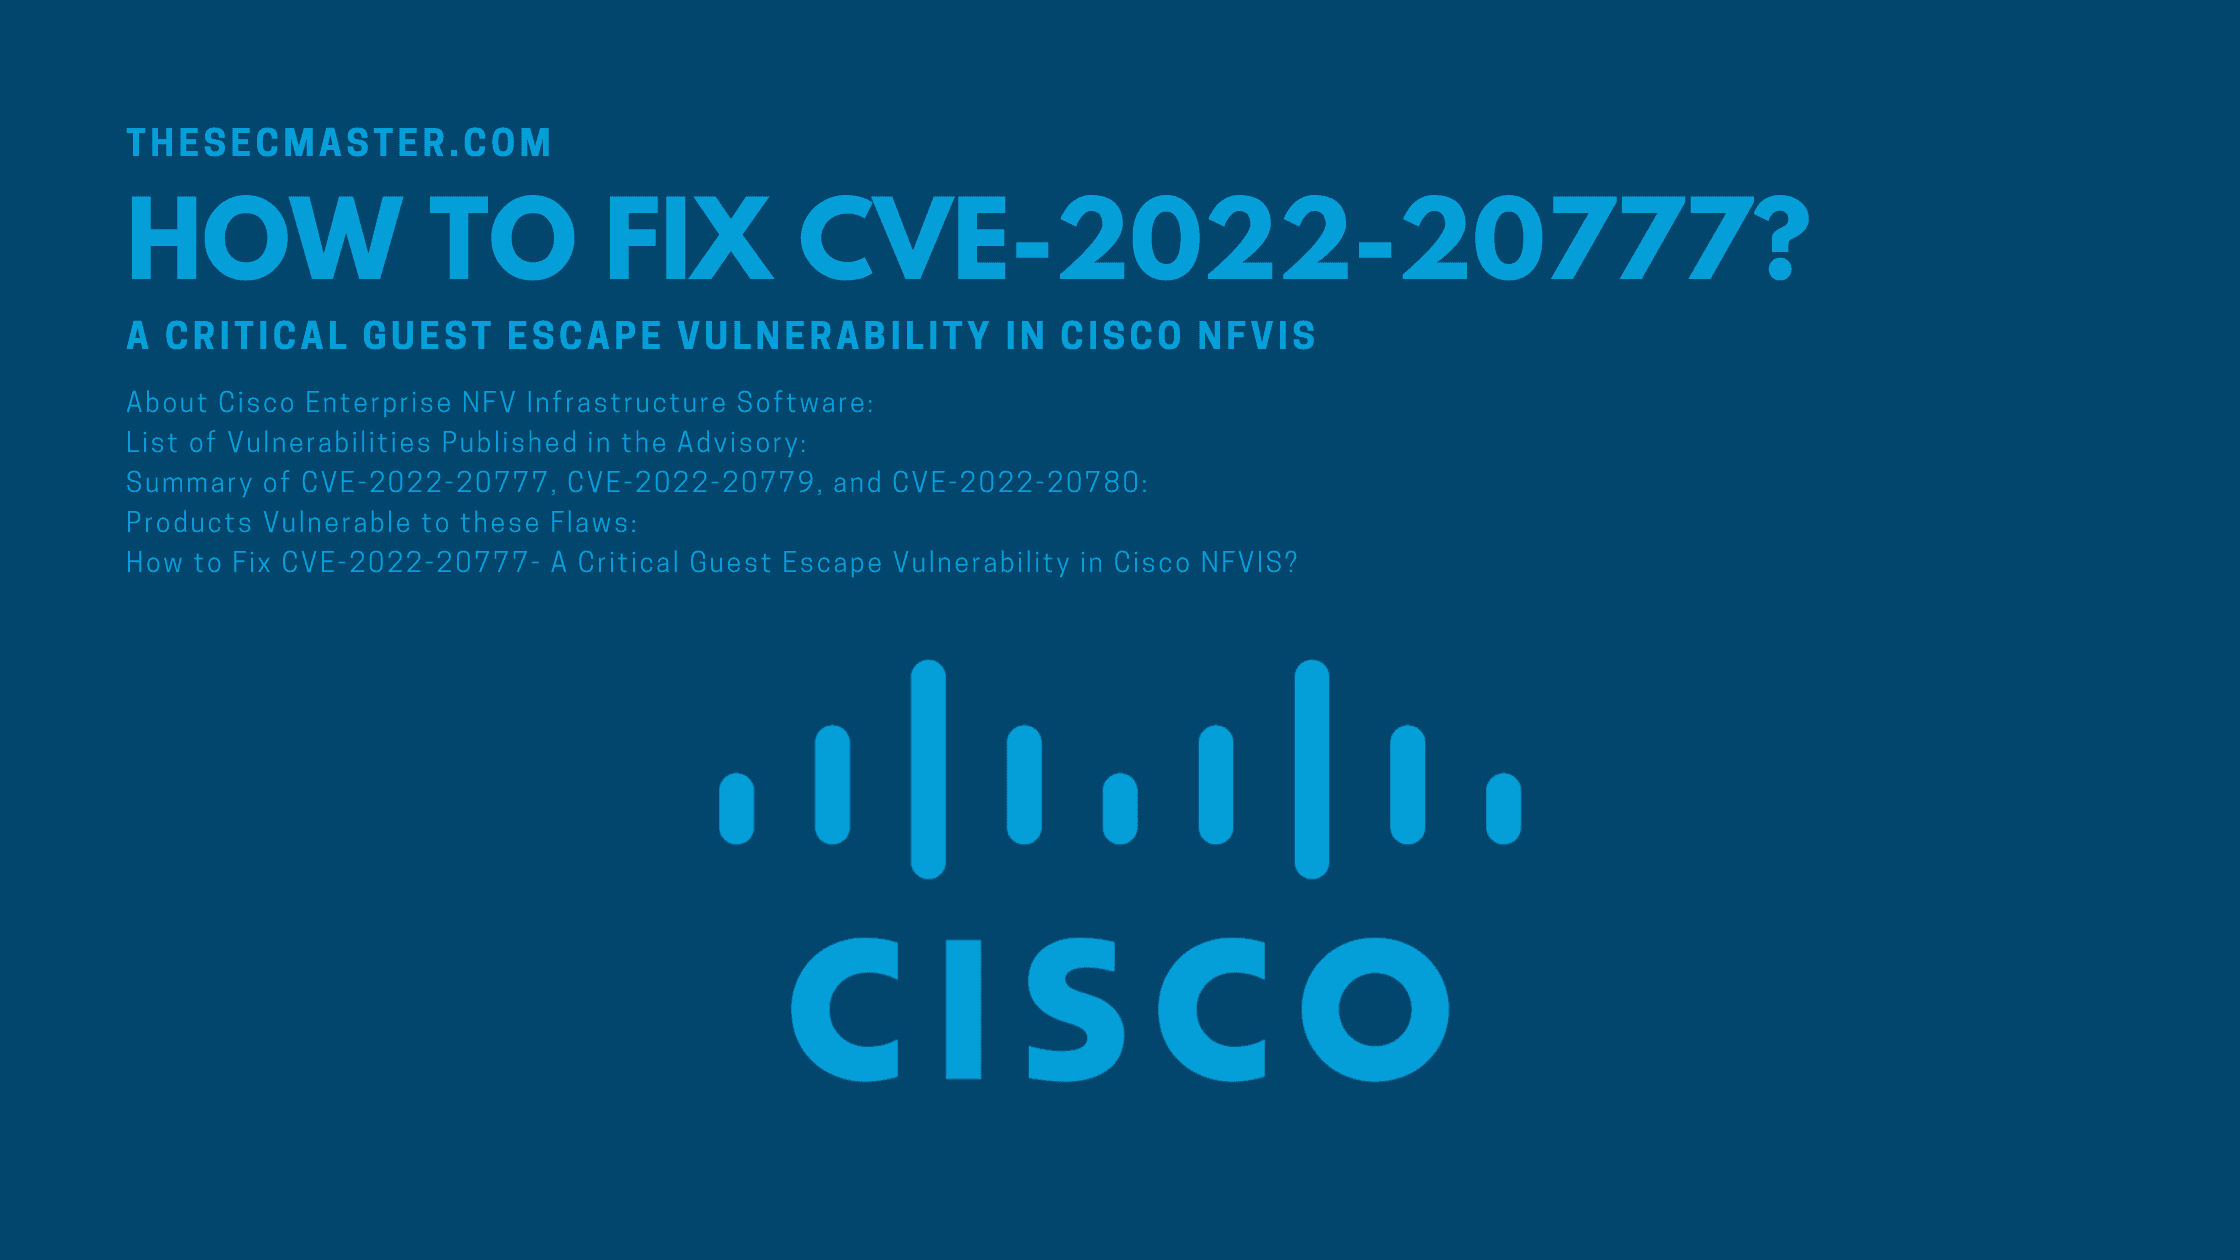 How To Fix Cve 2022 20777 A Critical Guest Escape Vulnerability In Cisco Nfvis